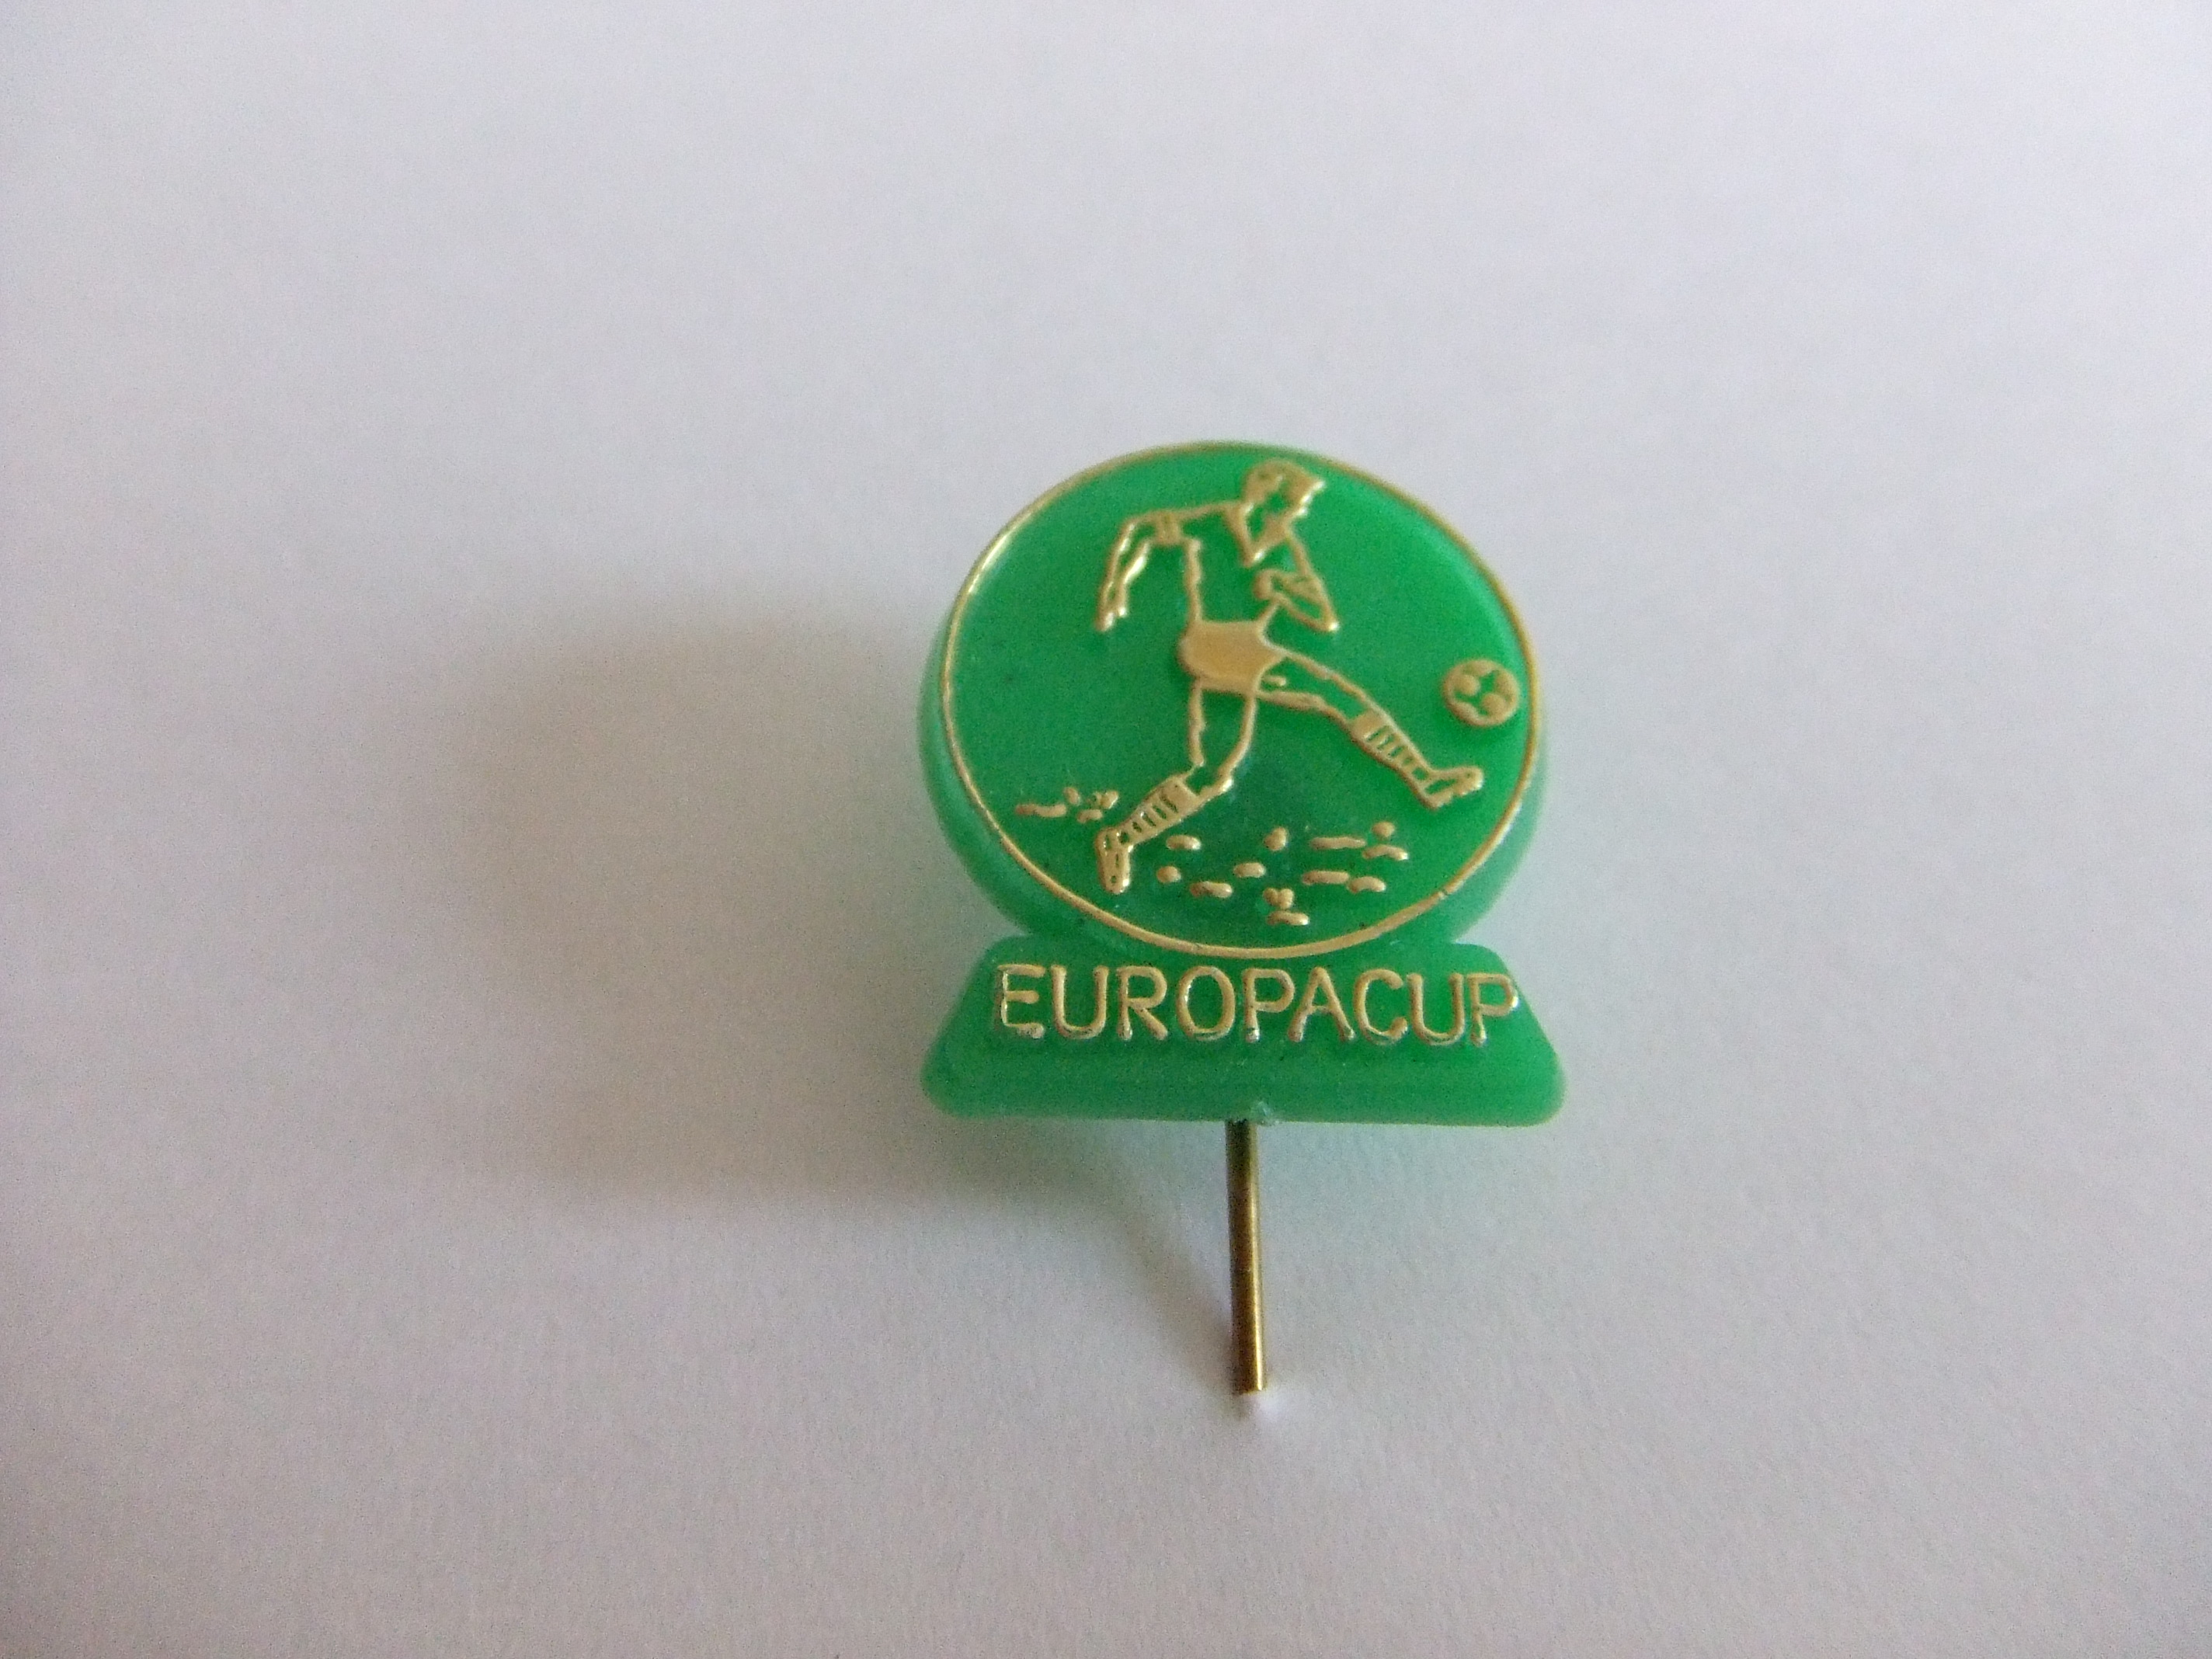 europa cup groen